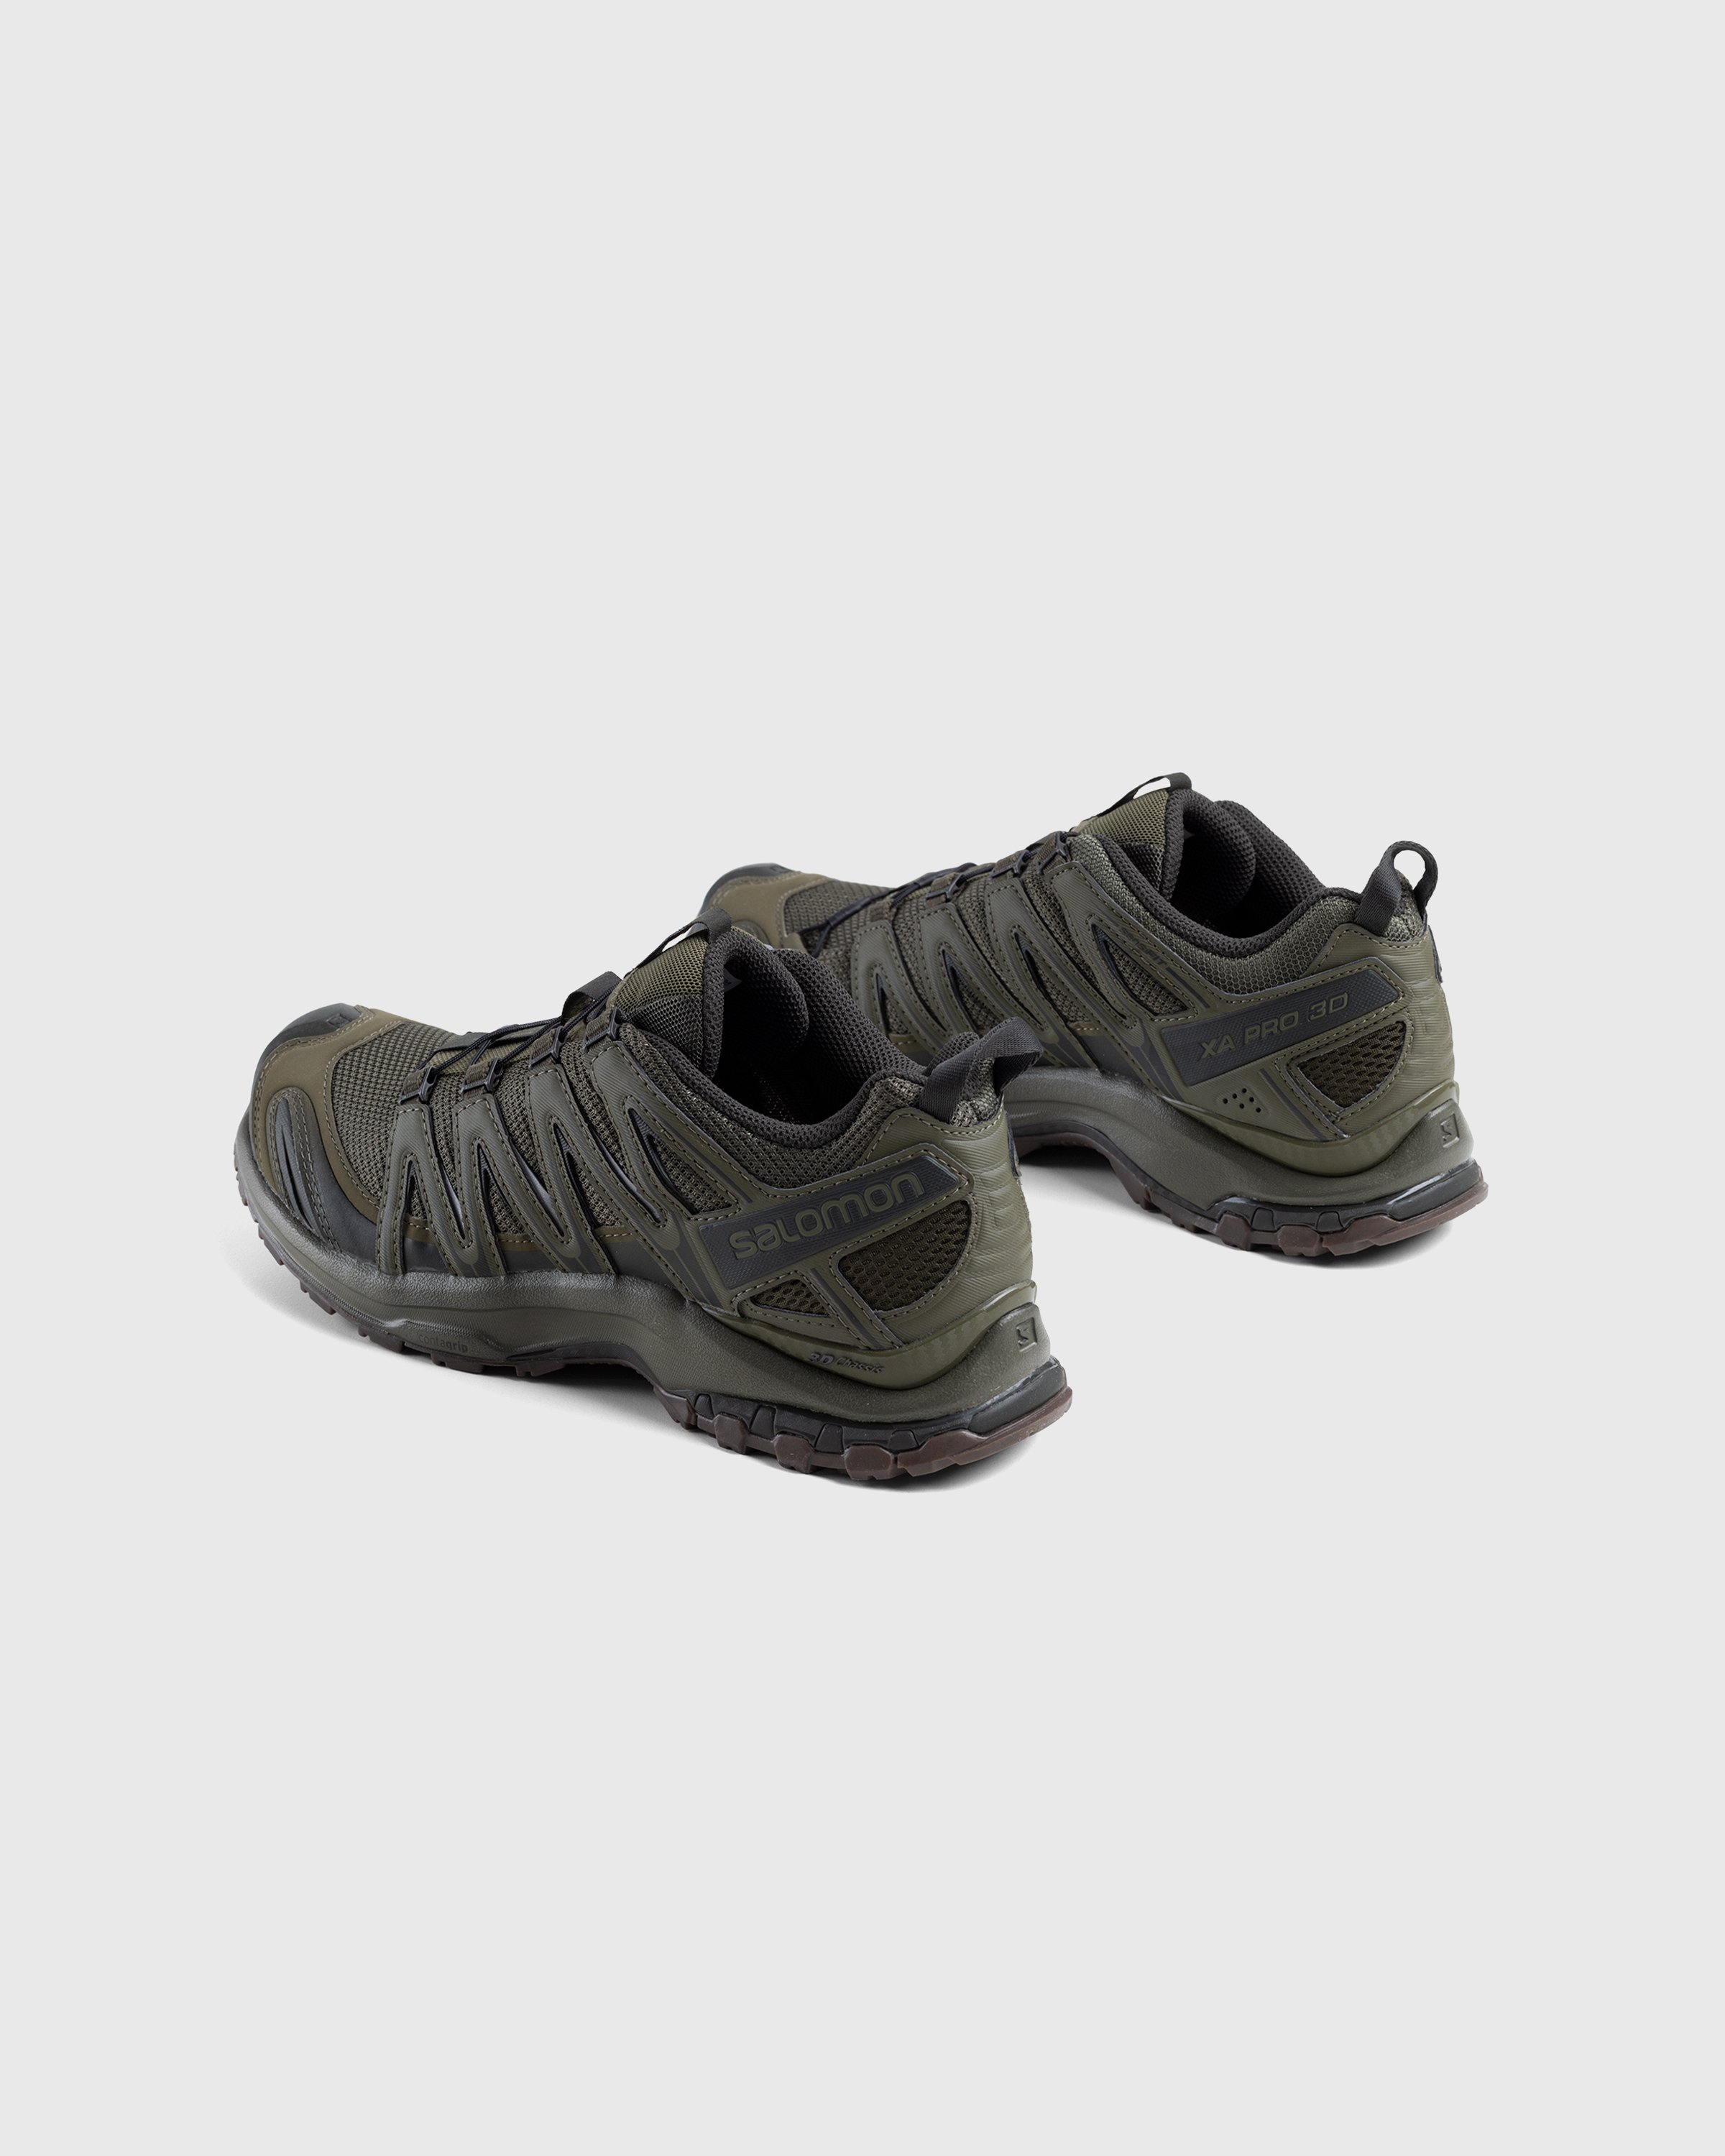 Salomon - XA Pro 3D Olive Night/Peat - Footwear - Black - Image 4